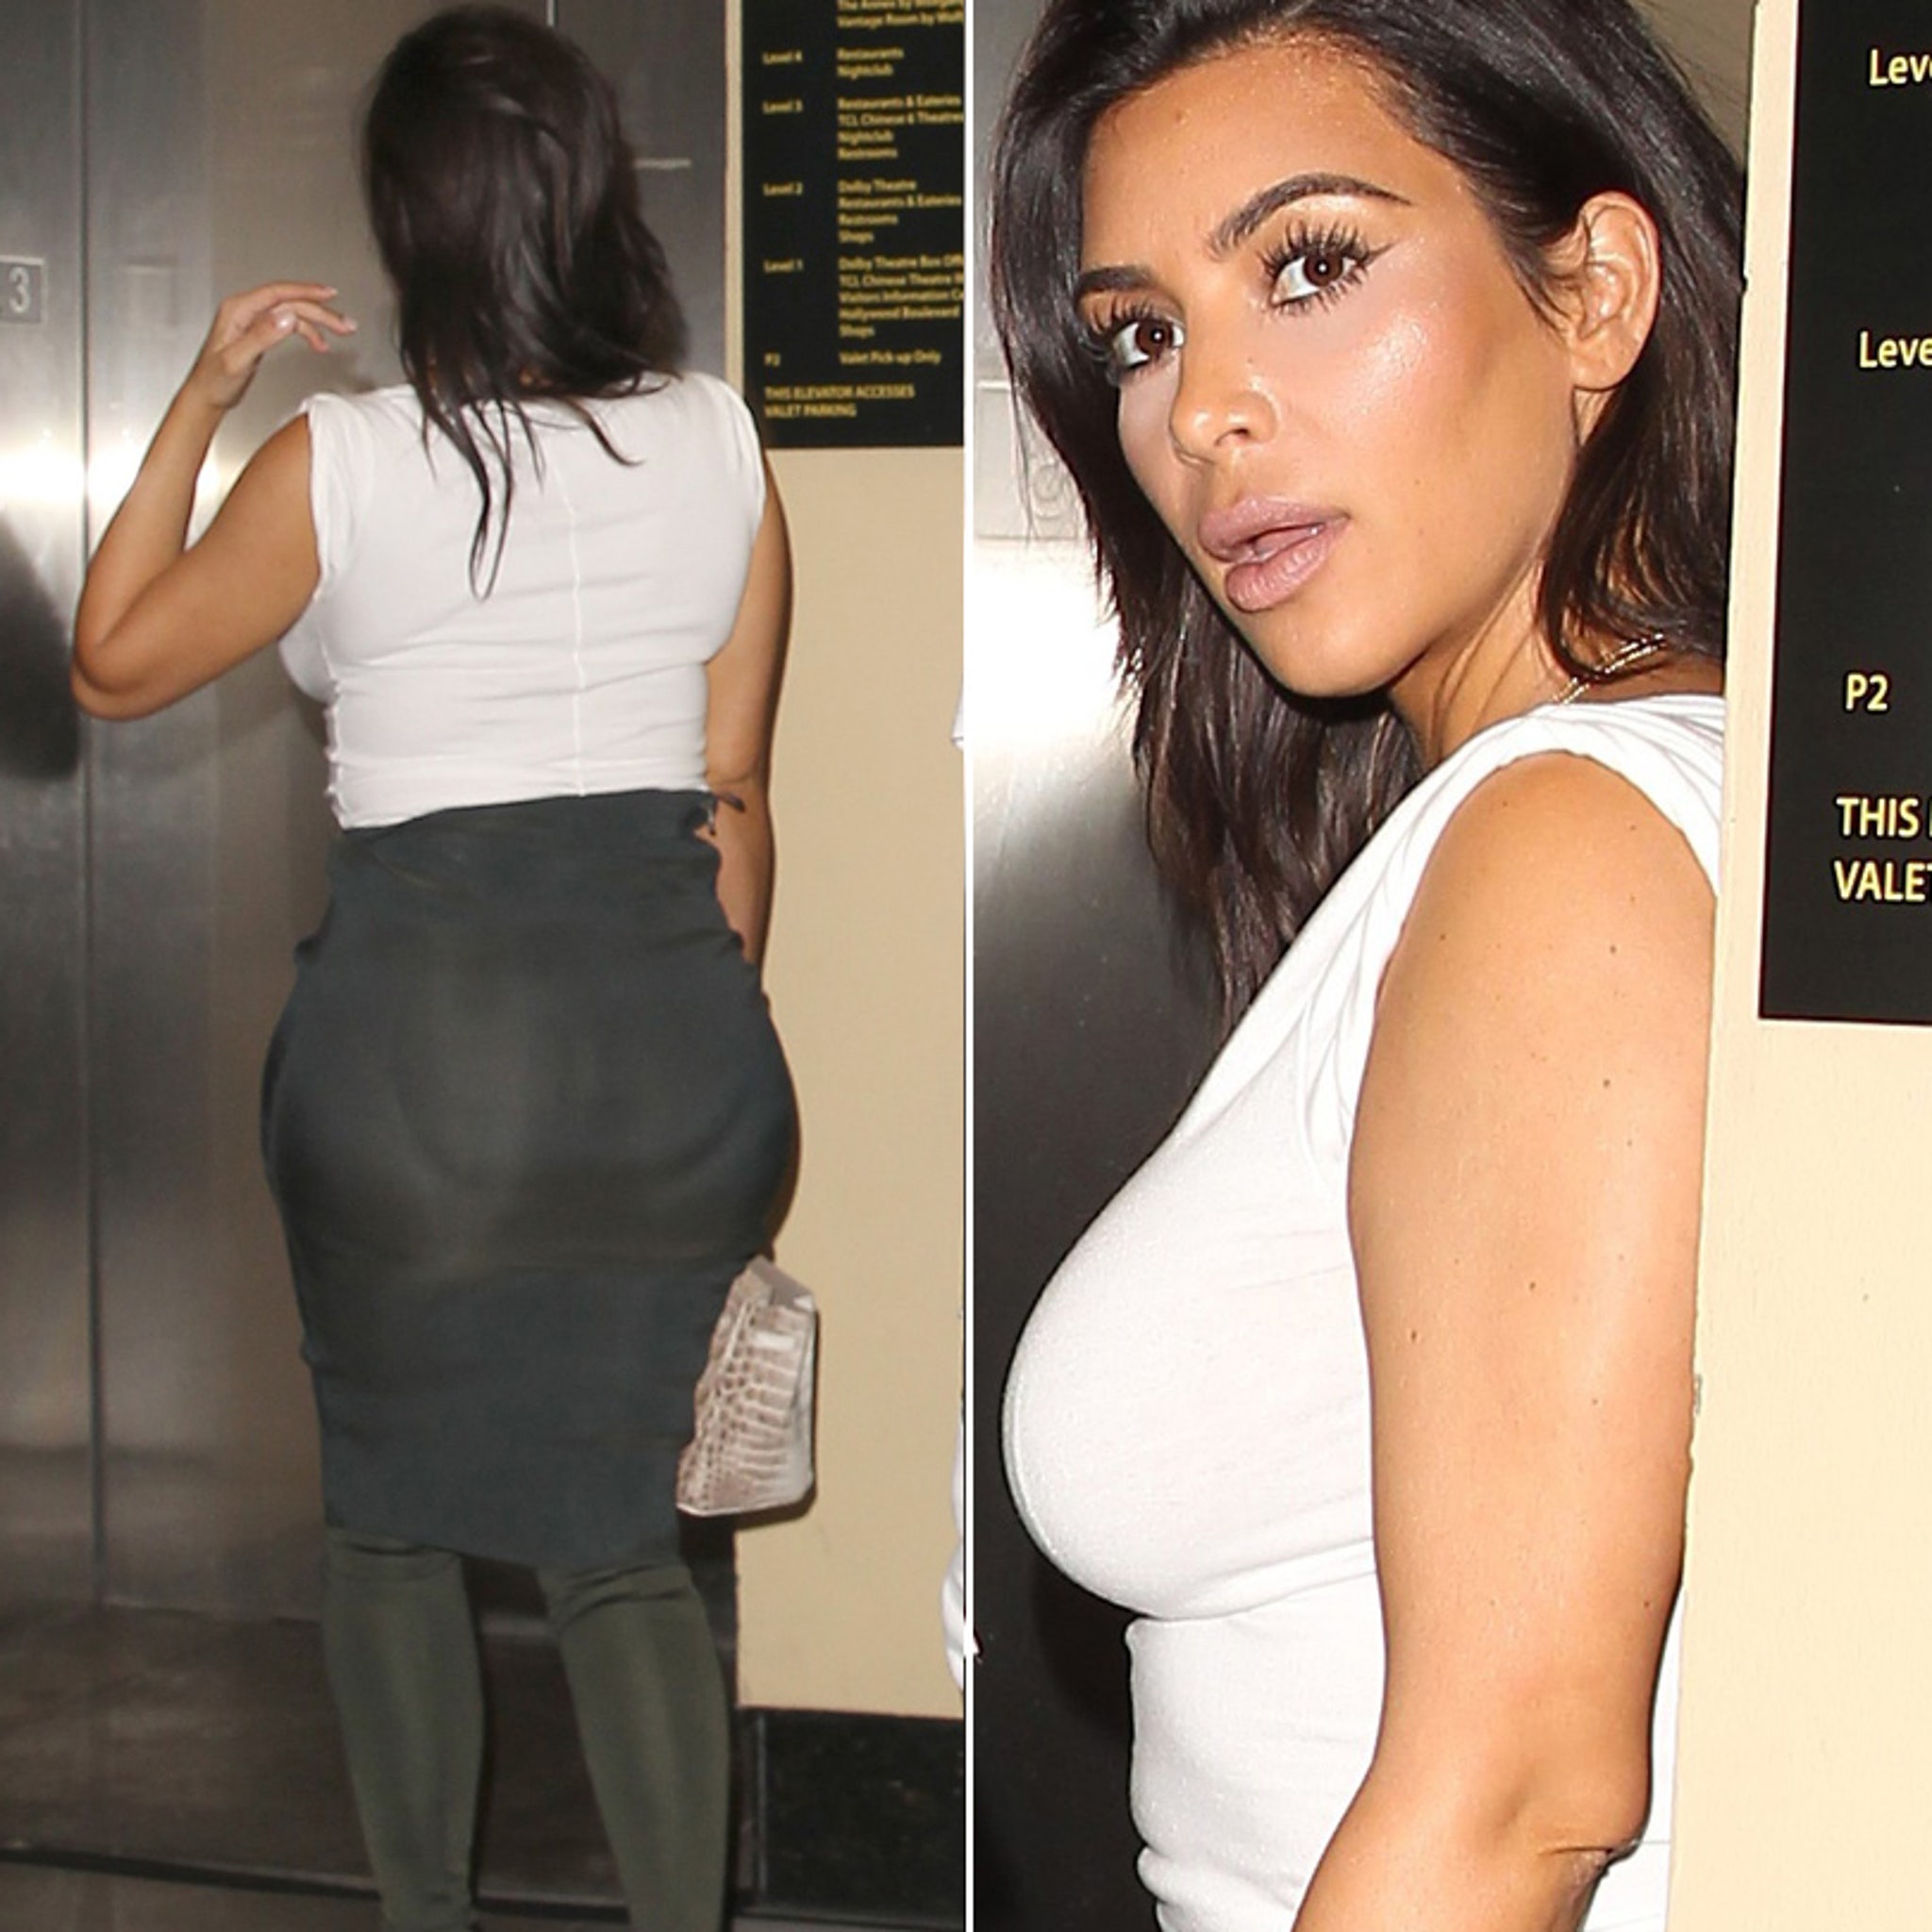 Kim Kardashian caught wearing butt pads under skirt – New York Daily News